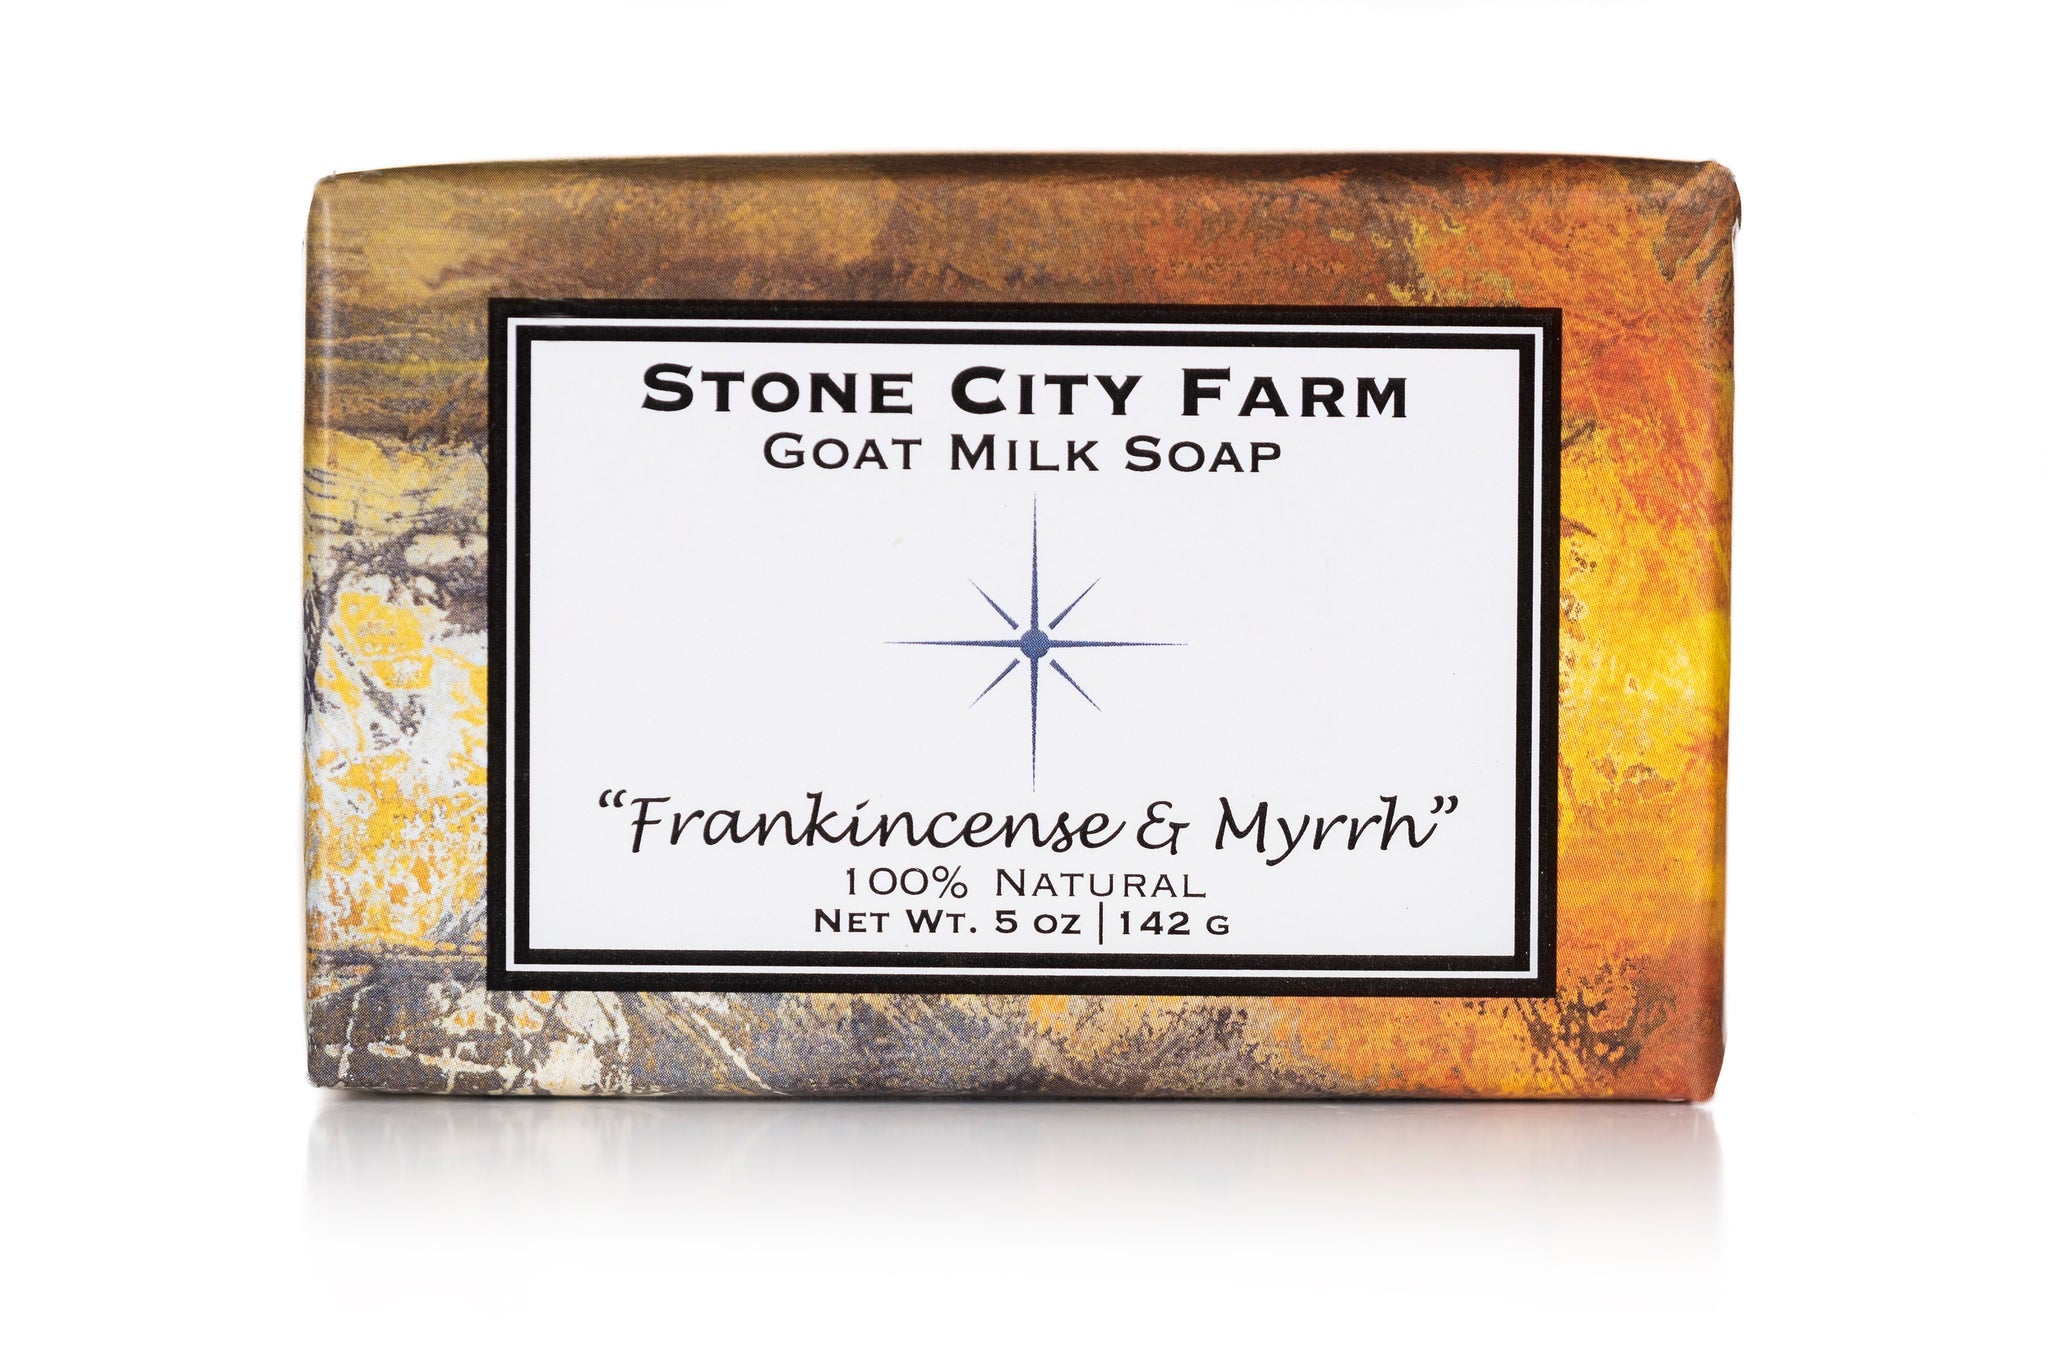 Frankincense & Myrrh Soap with Goat Milk - Goat Milk Stuff